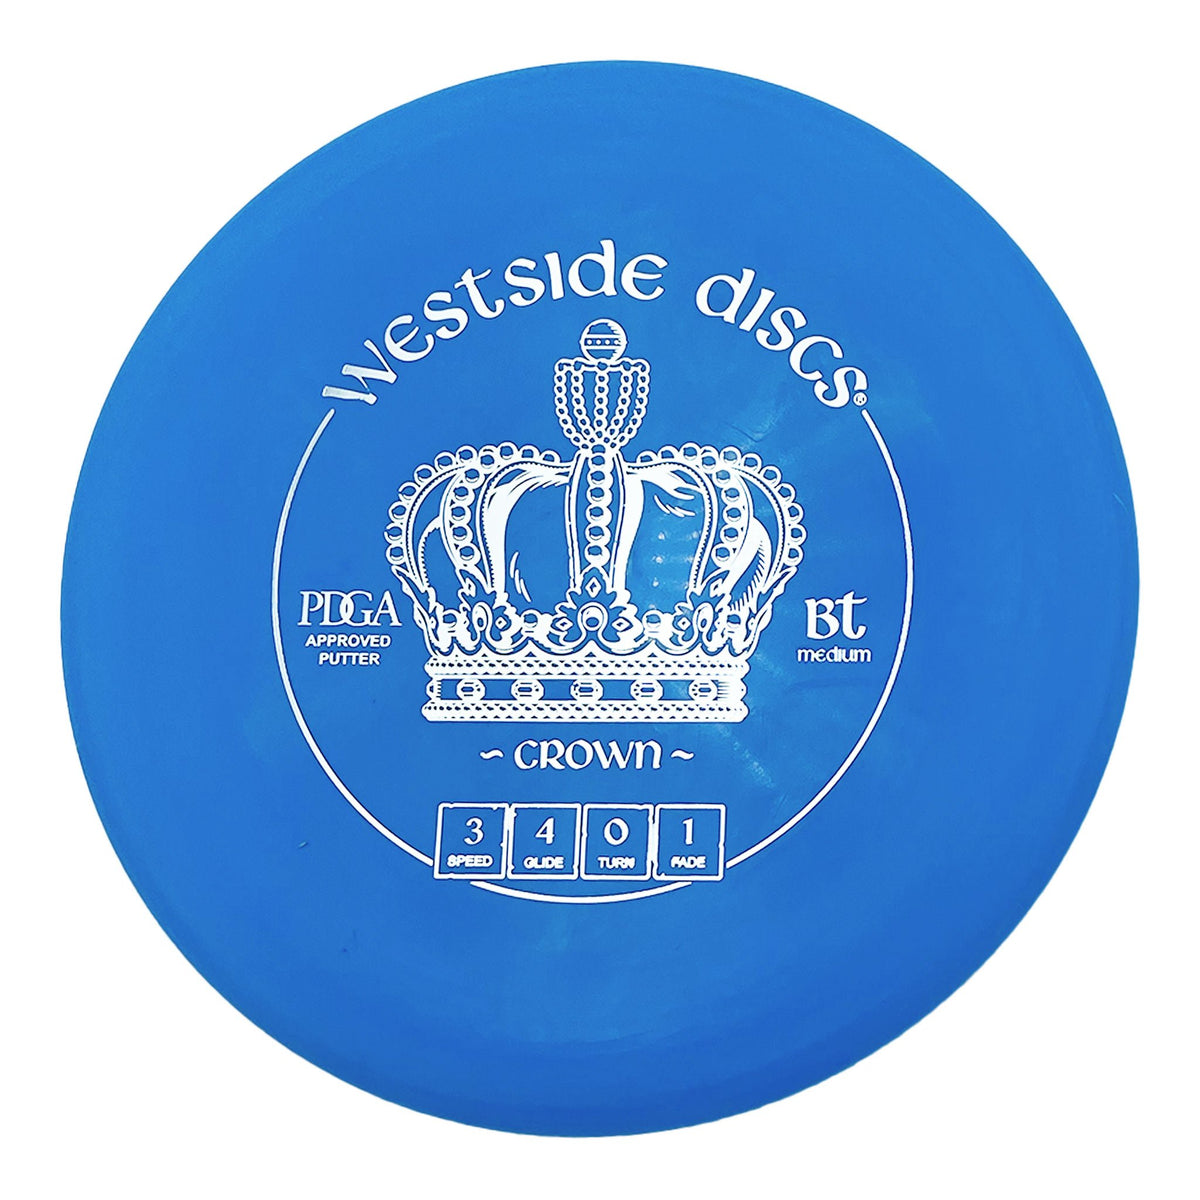 Westside Discs BT Medium Crown putter and approach - Blue